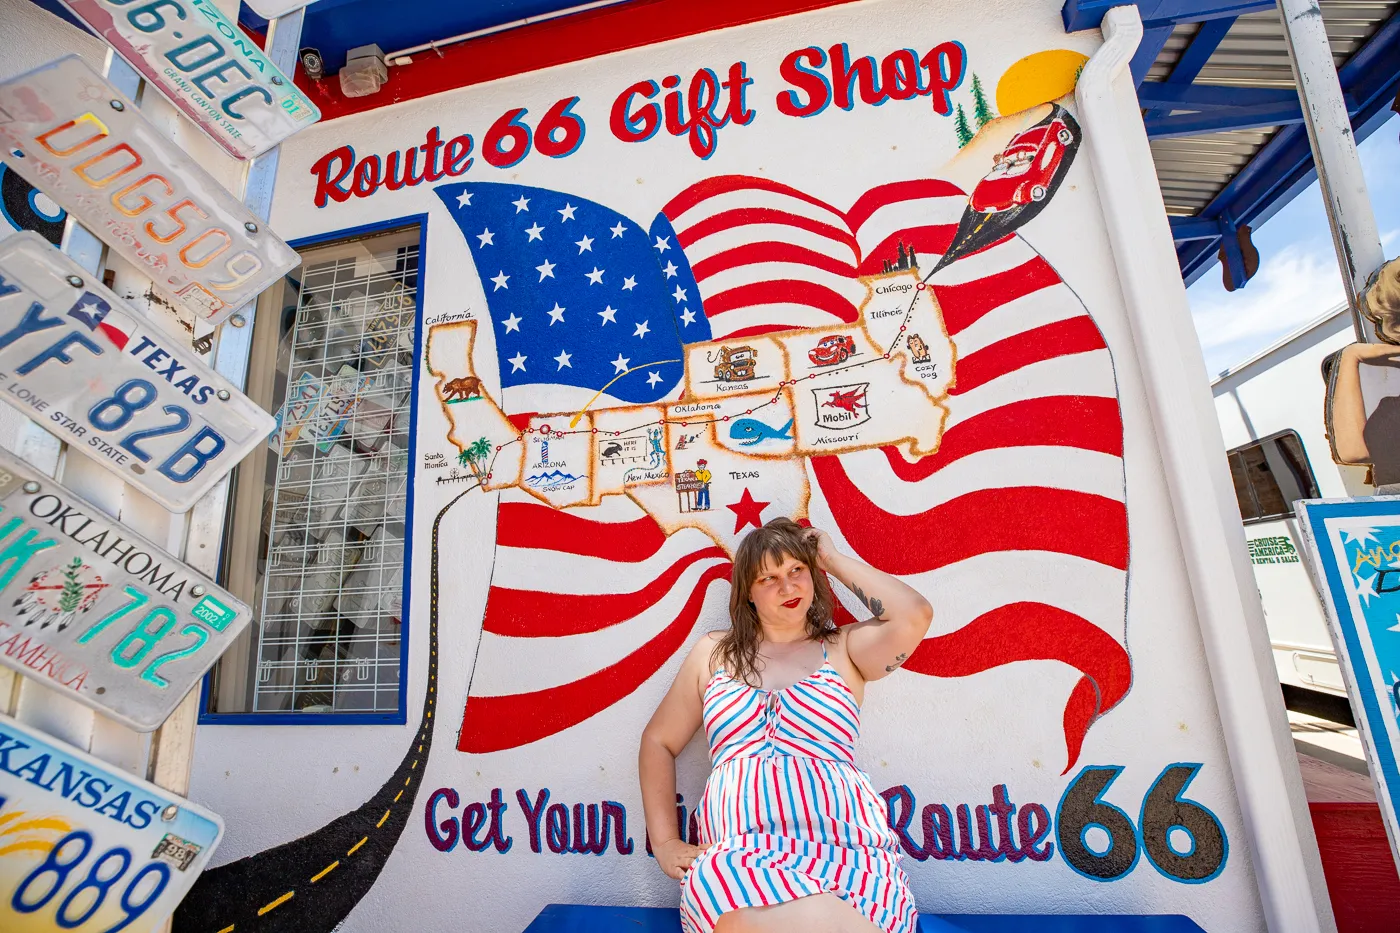 Angel & Vilma Delgadillo's Original Route 66 Gift Shop in Seligman, Arizona Route 66 Museum and Gift Shop